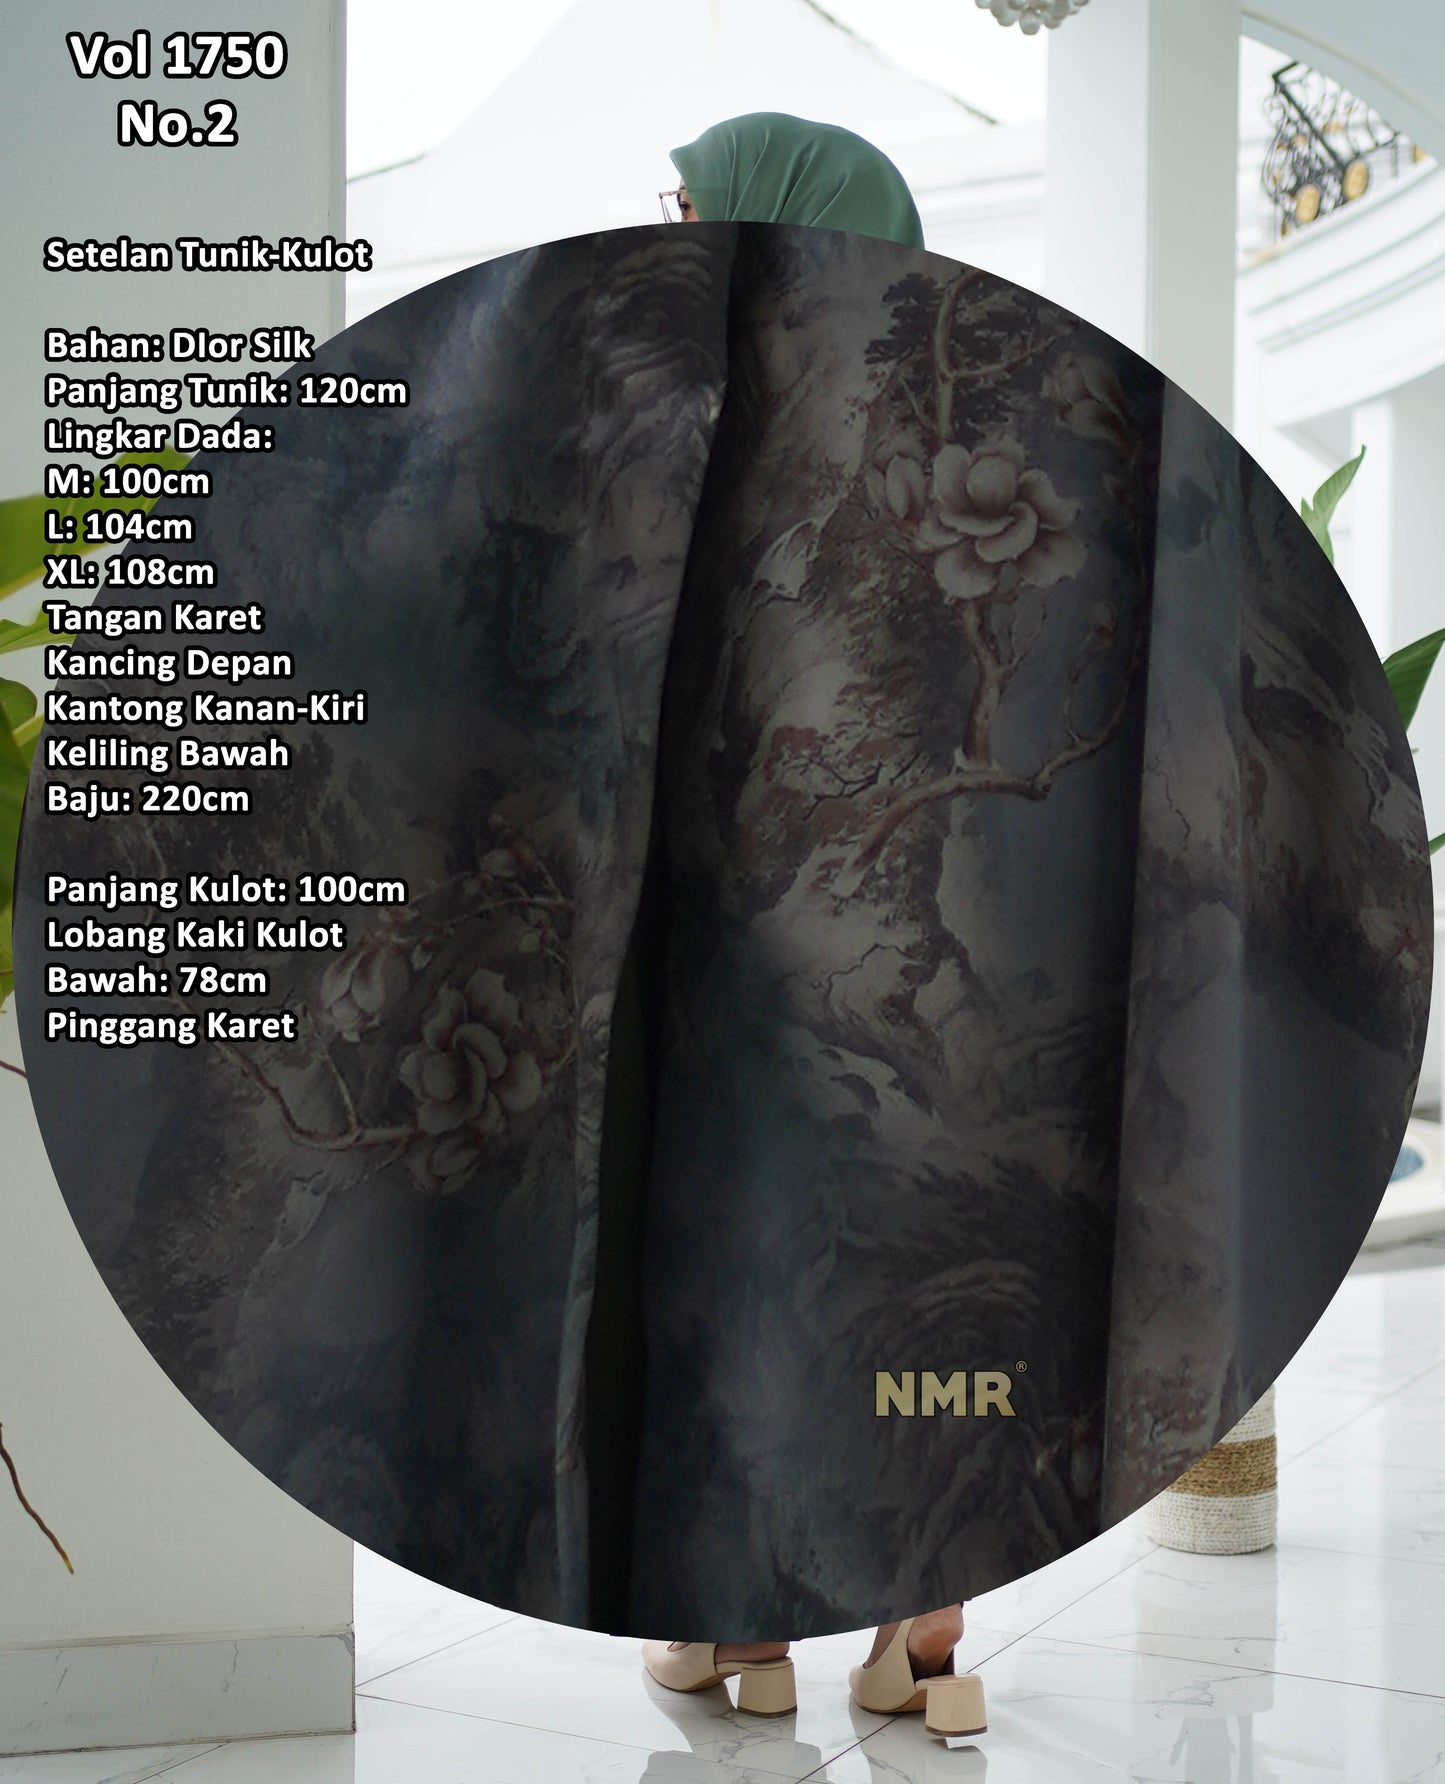 NMR Setelan Kulot Armany Silk Tunik Diir Silk Vol 1750-2